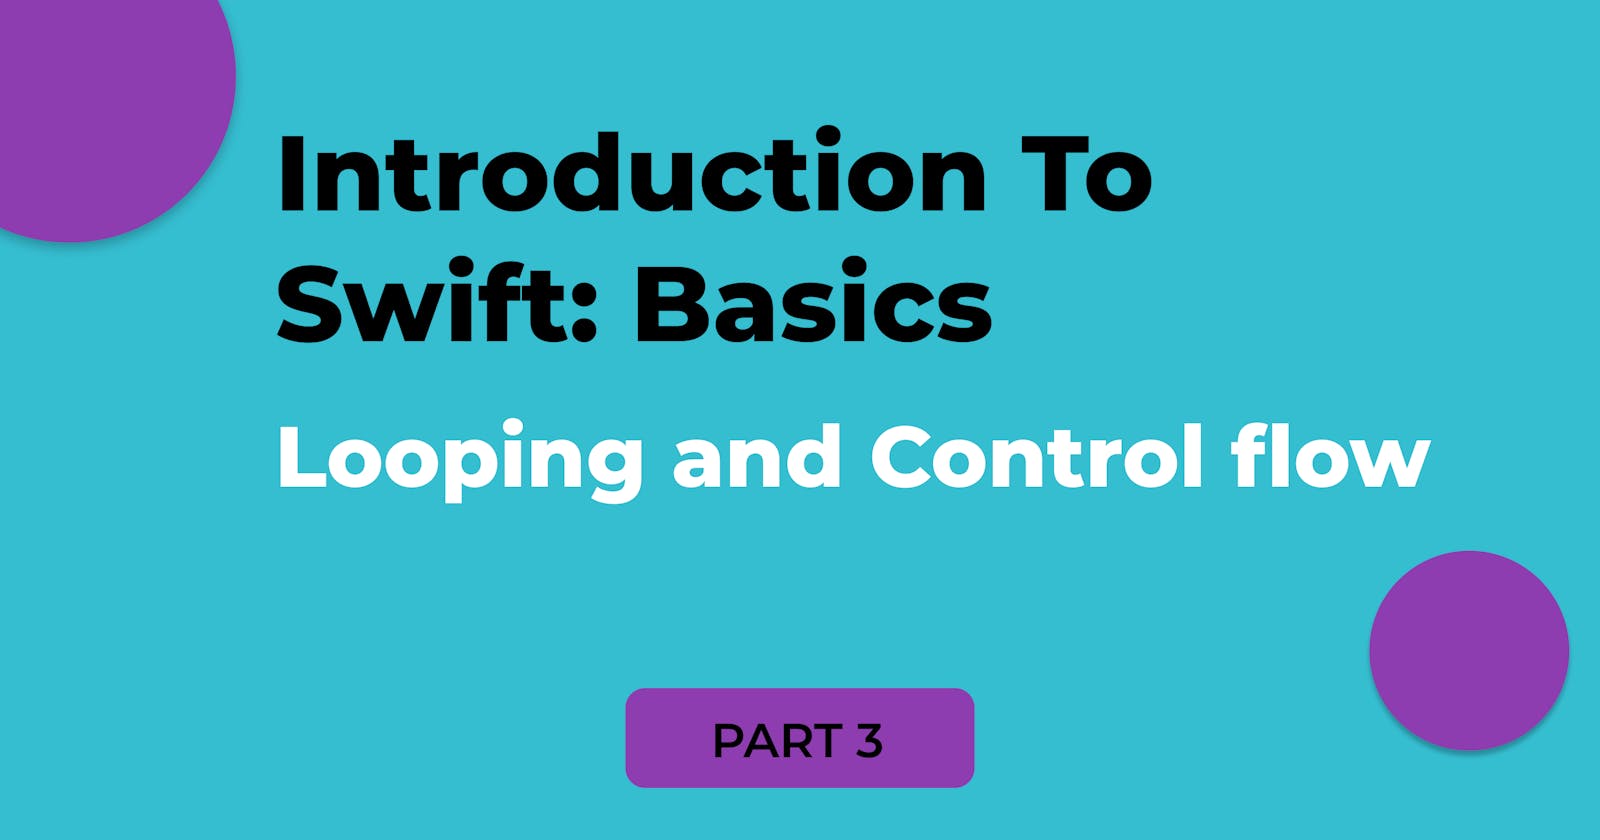 Introduction To Swift: Basics (Part 3)